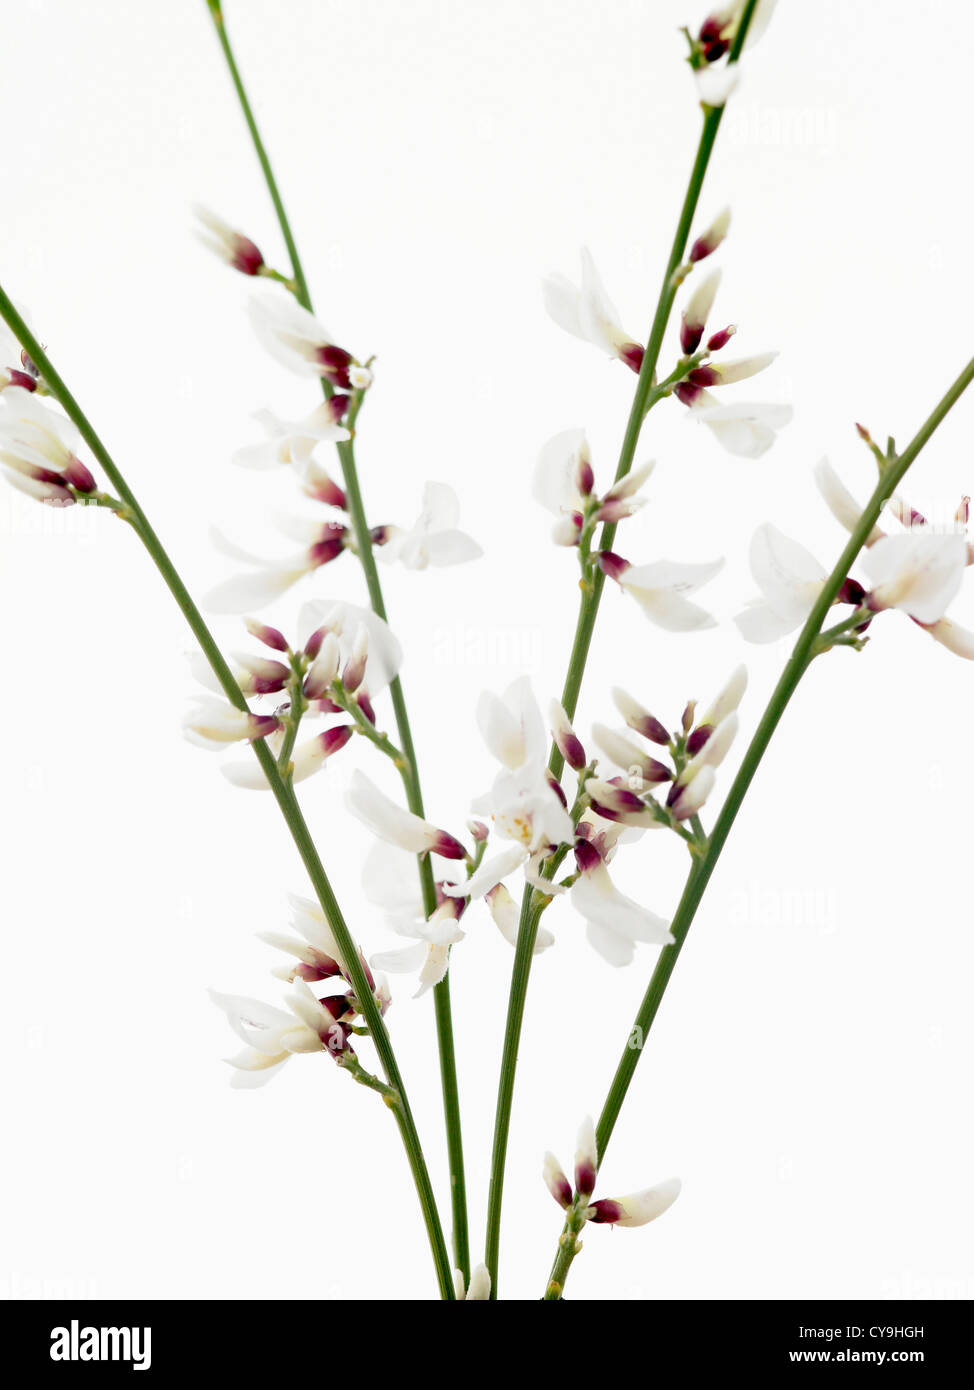 Genista monosperma, White broom flowers on stems against a white background. Stock Photo